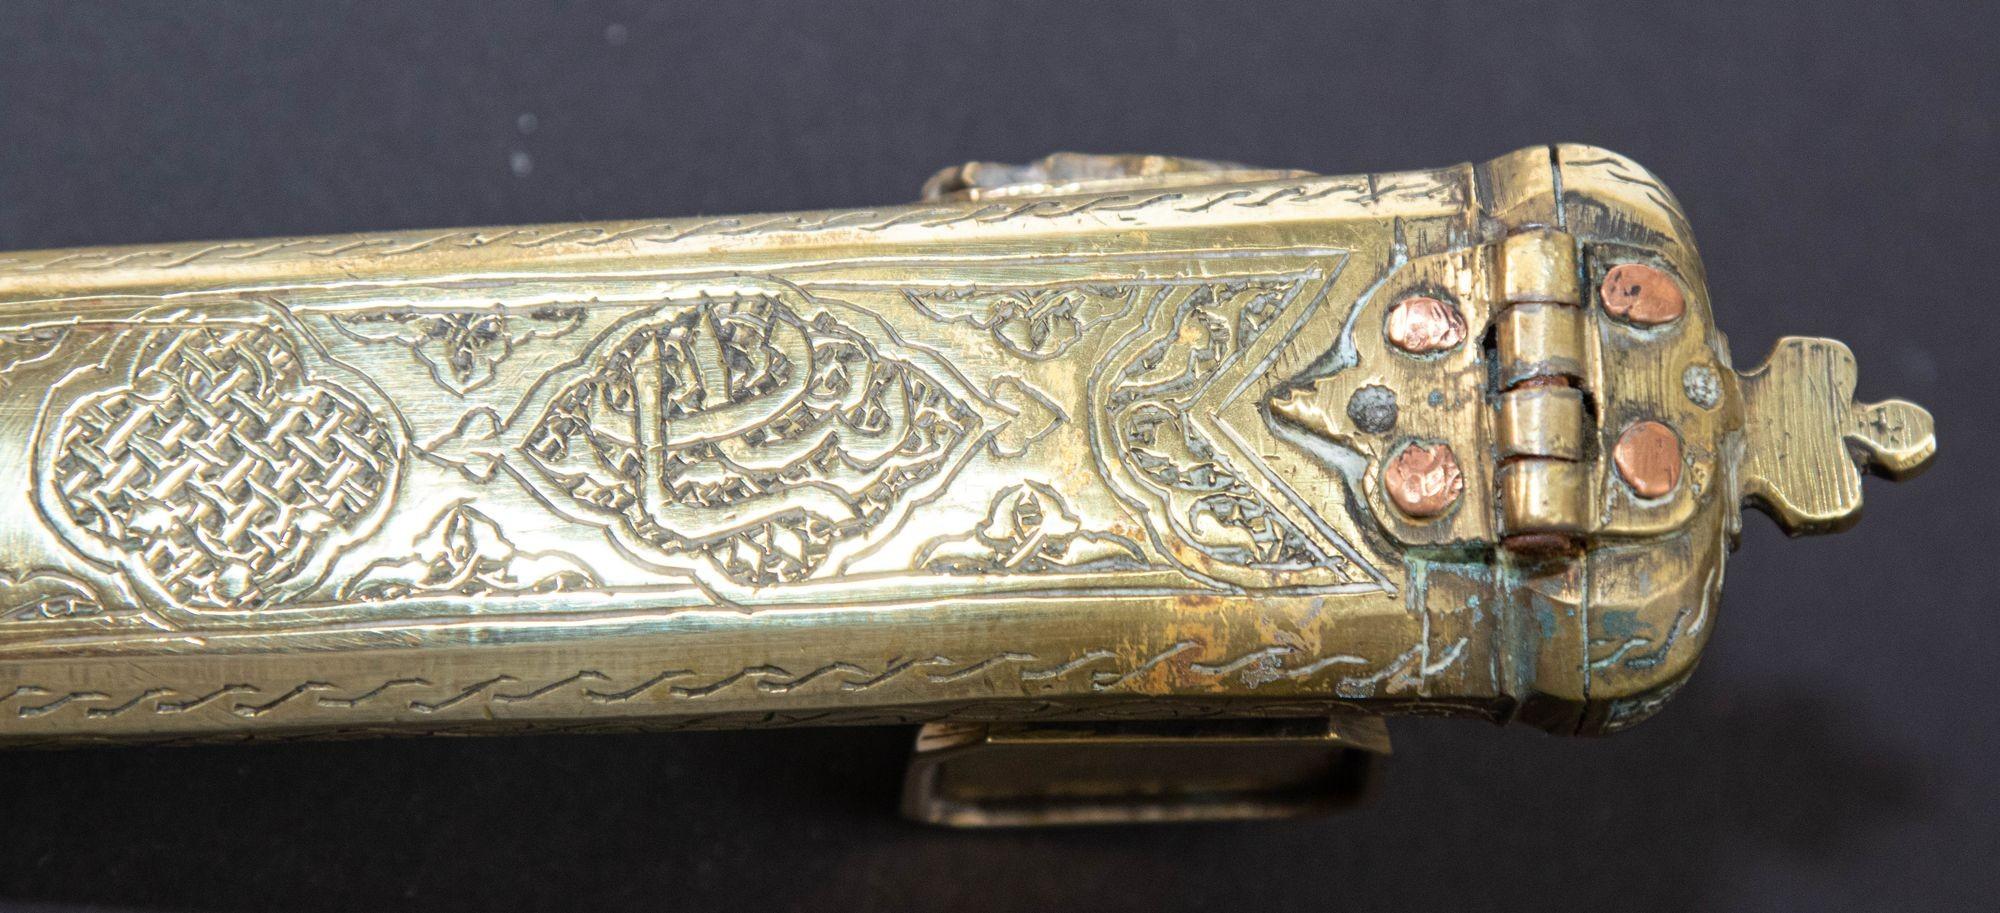 Antique Ottoman Turkish Brass Inkwell Qalamdan with Arabic Calligraphy Writing For Sale 4